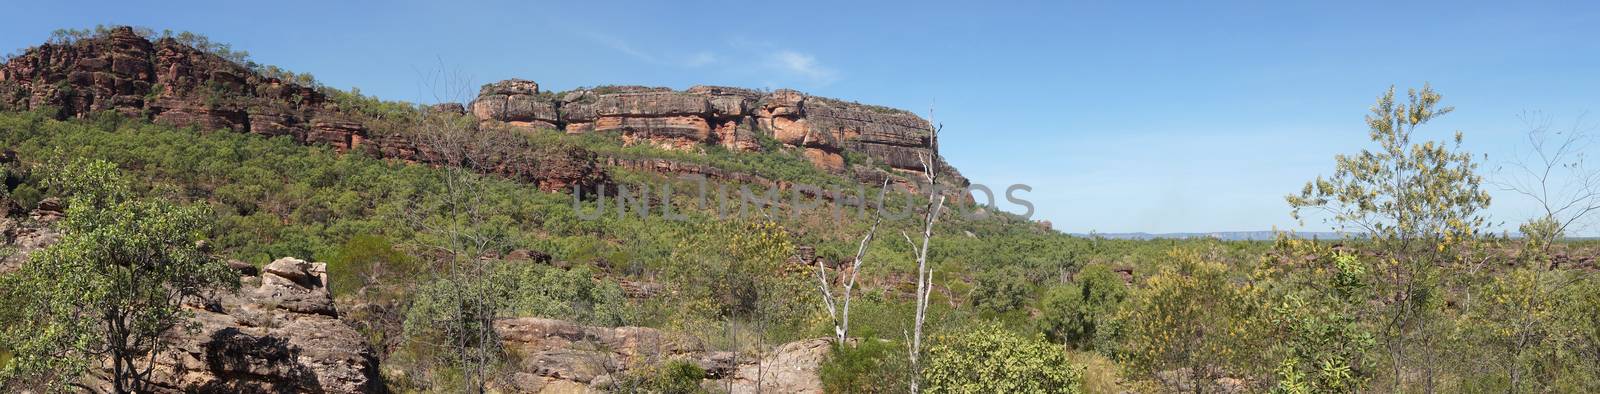 Nourlangie Rock, Kakadu National Park, Australia